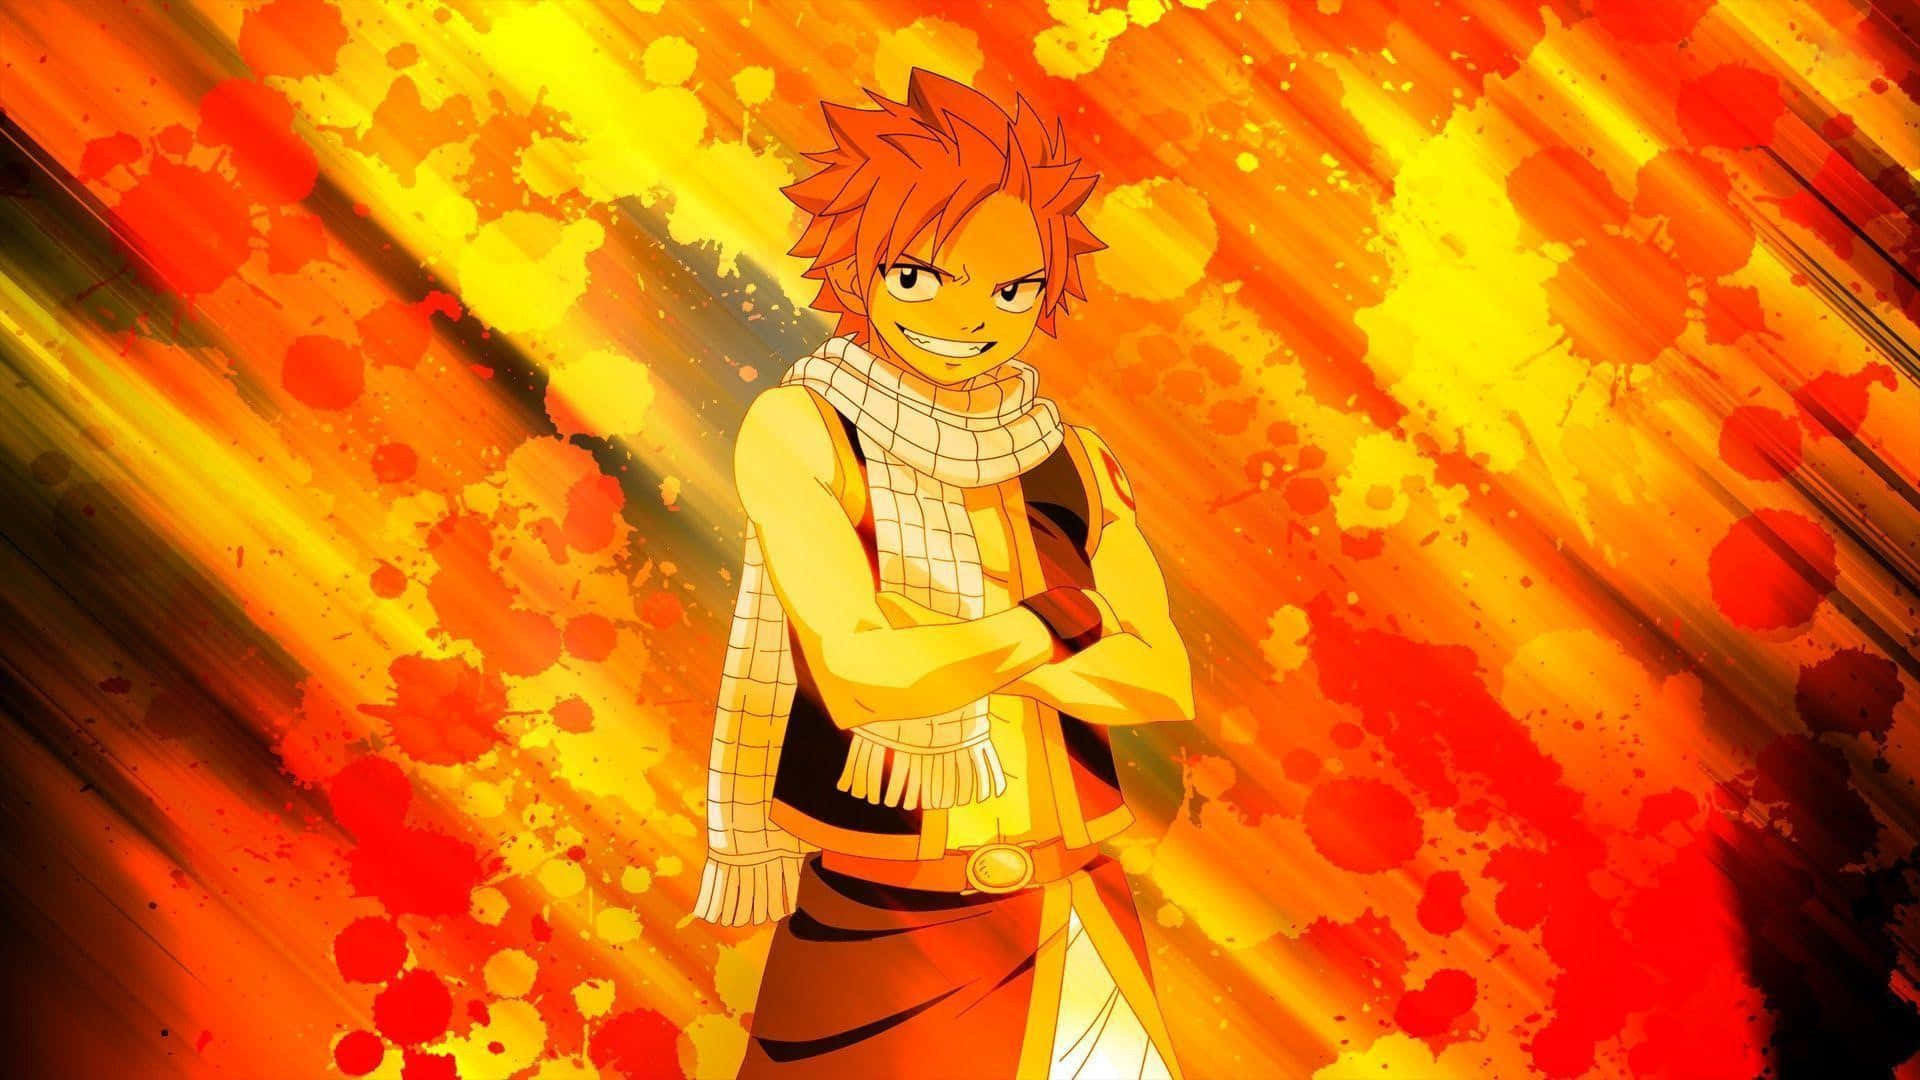 Natsu Dragneel in Action - Fairy Tail's Fierce Fire Dragon Slayer Wallpaper